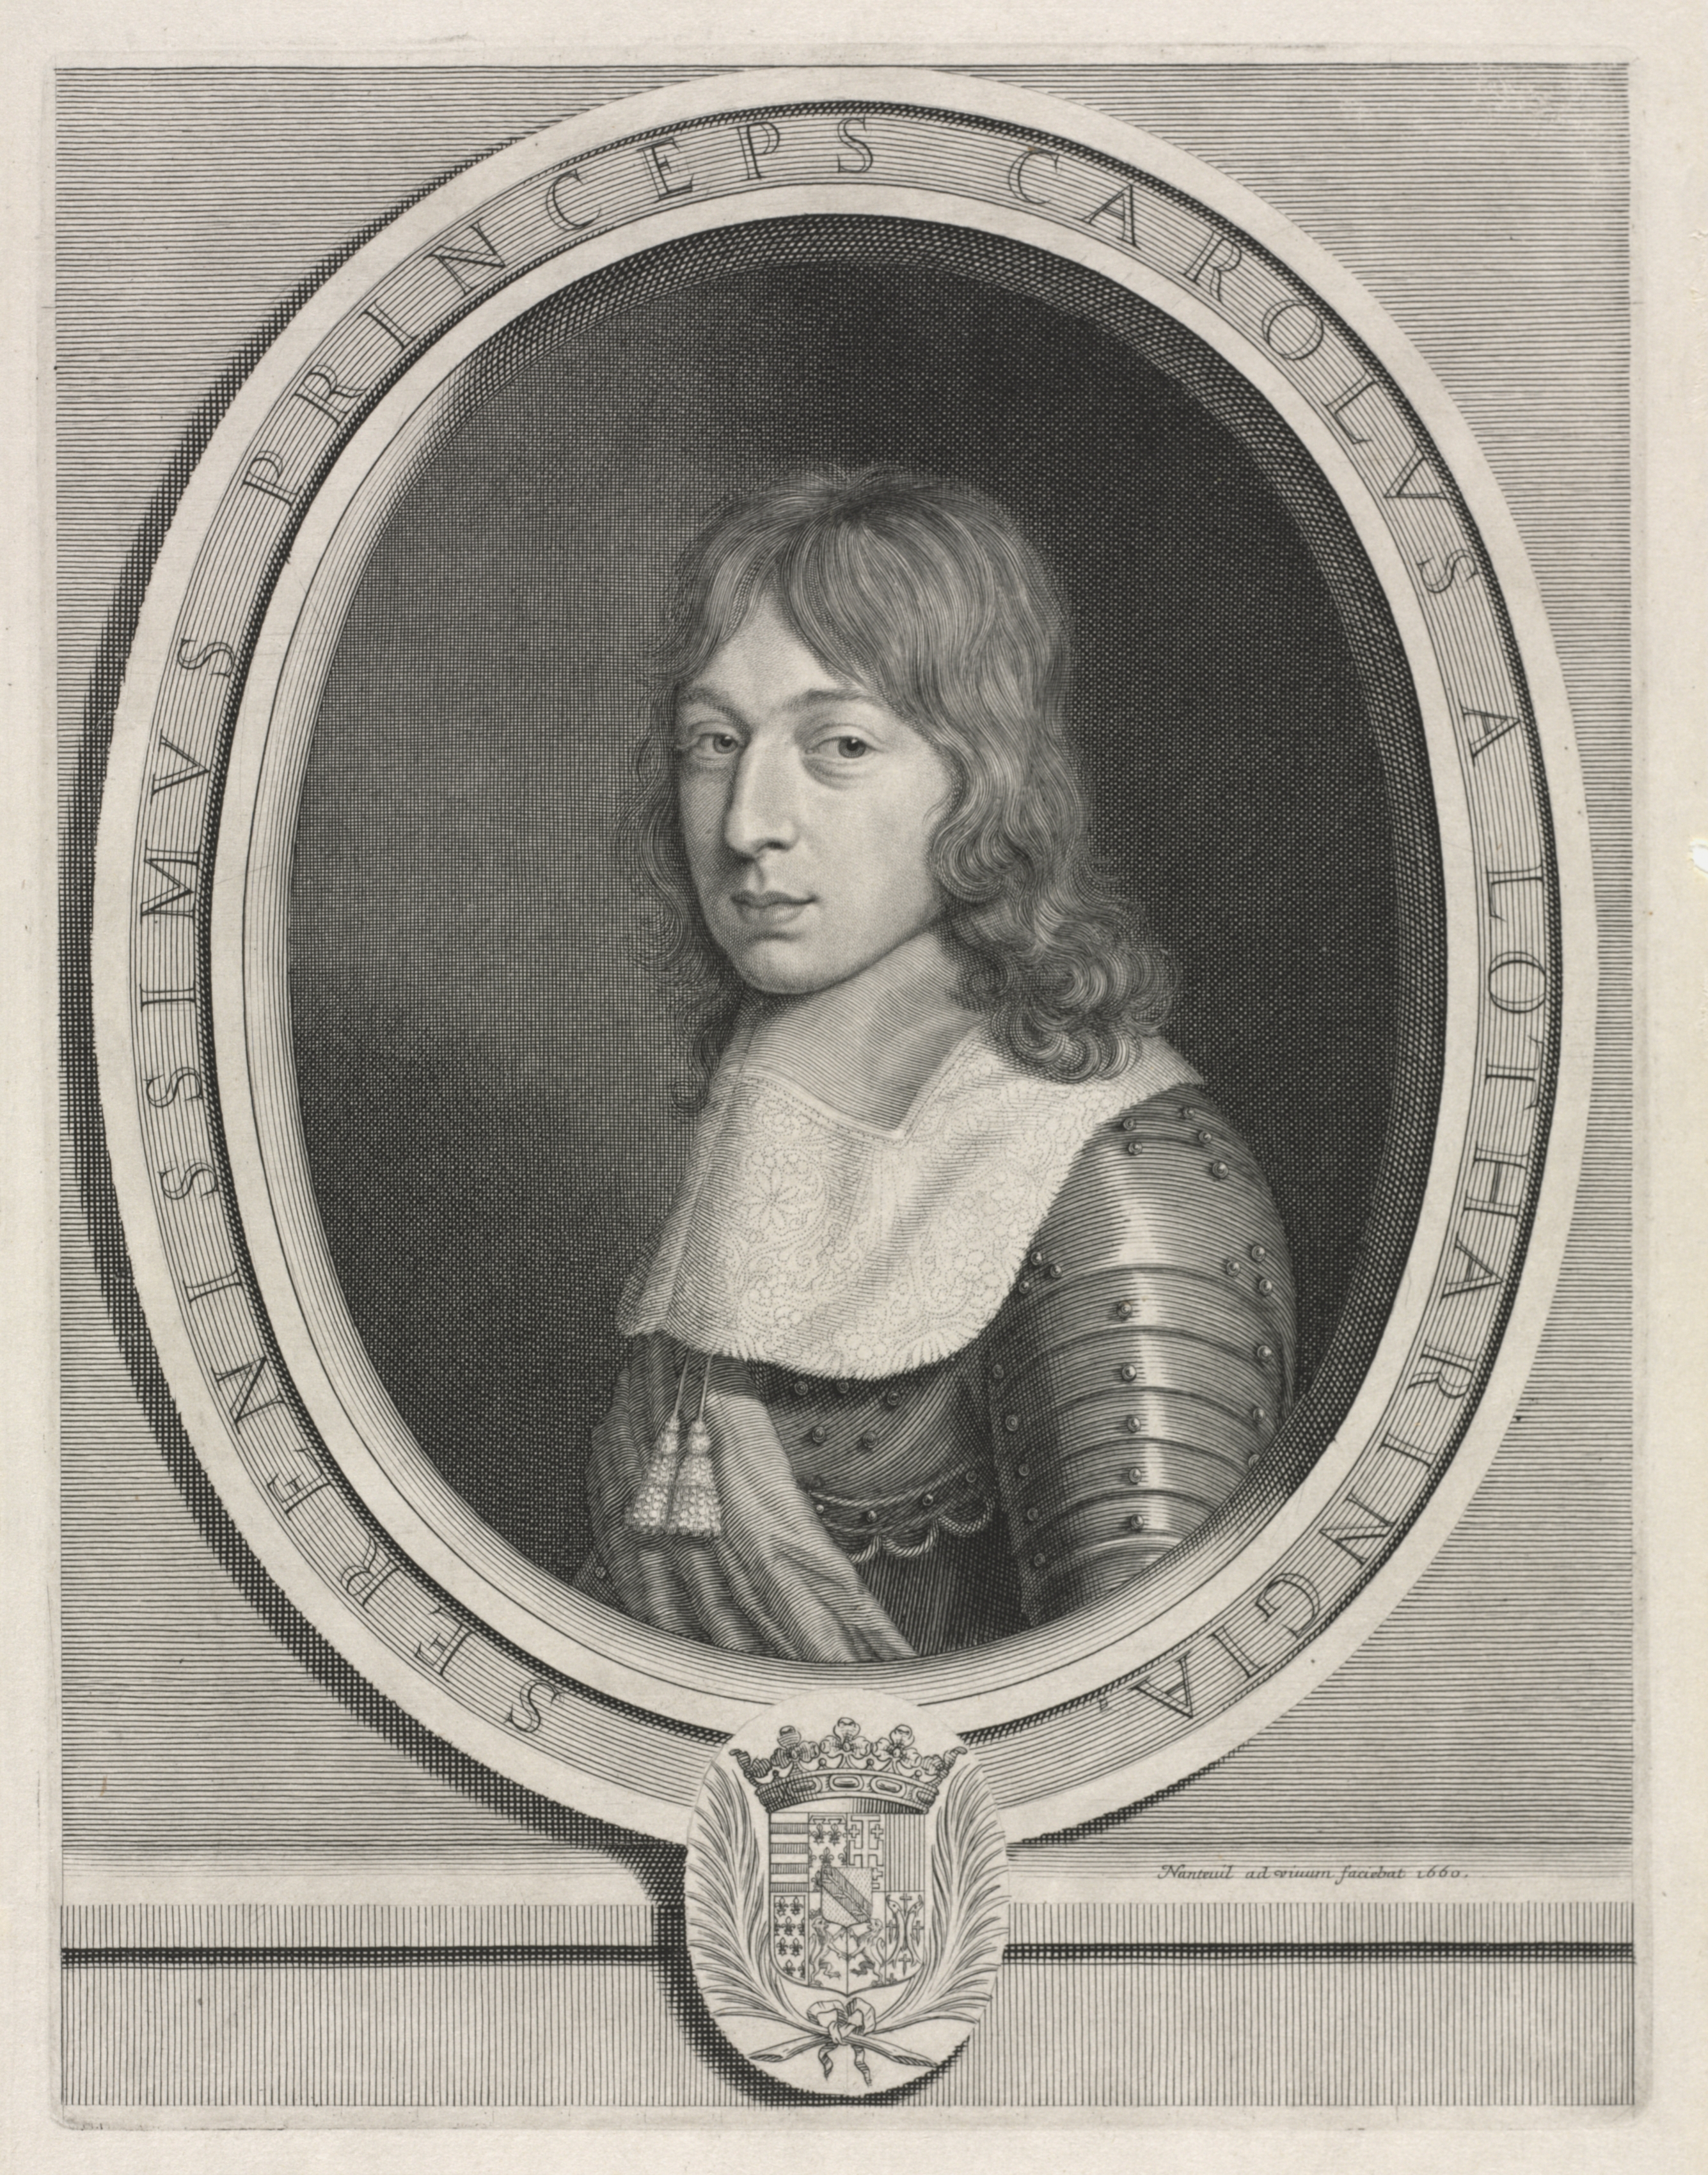 Charles V, Duke of Lorrain